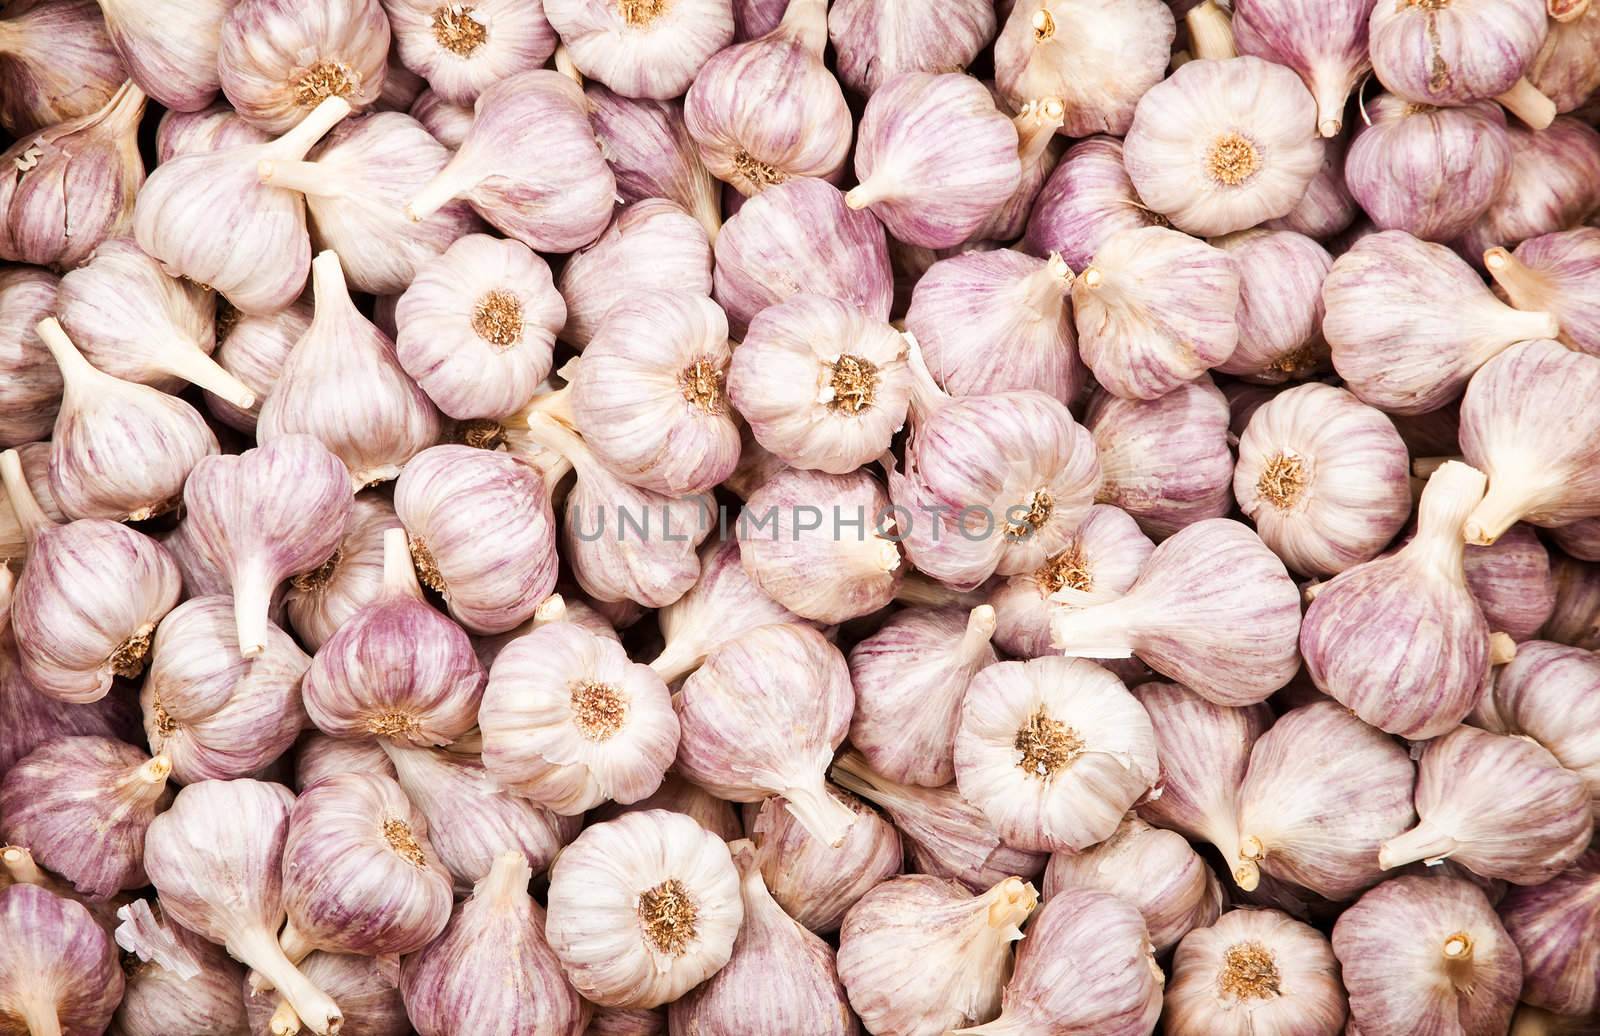 Many heads of fresh organic garlic fill the frame